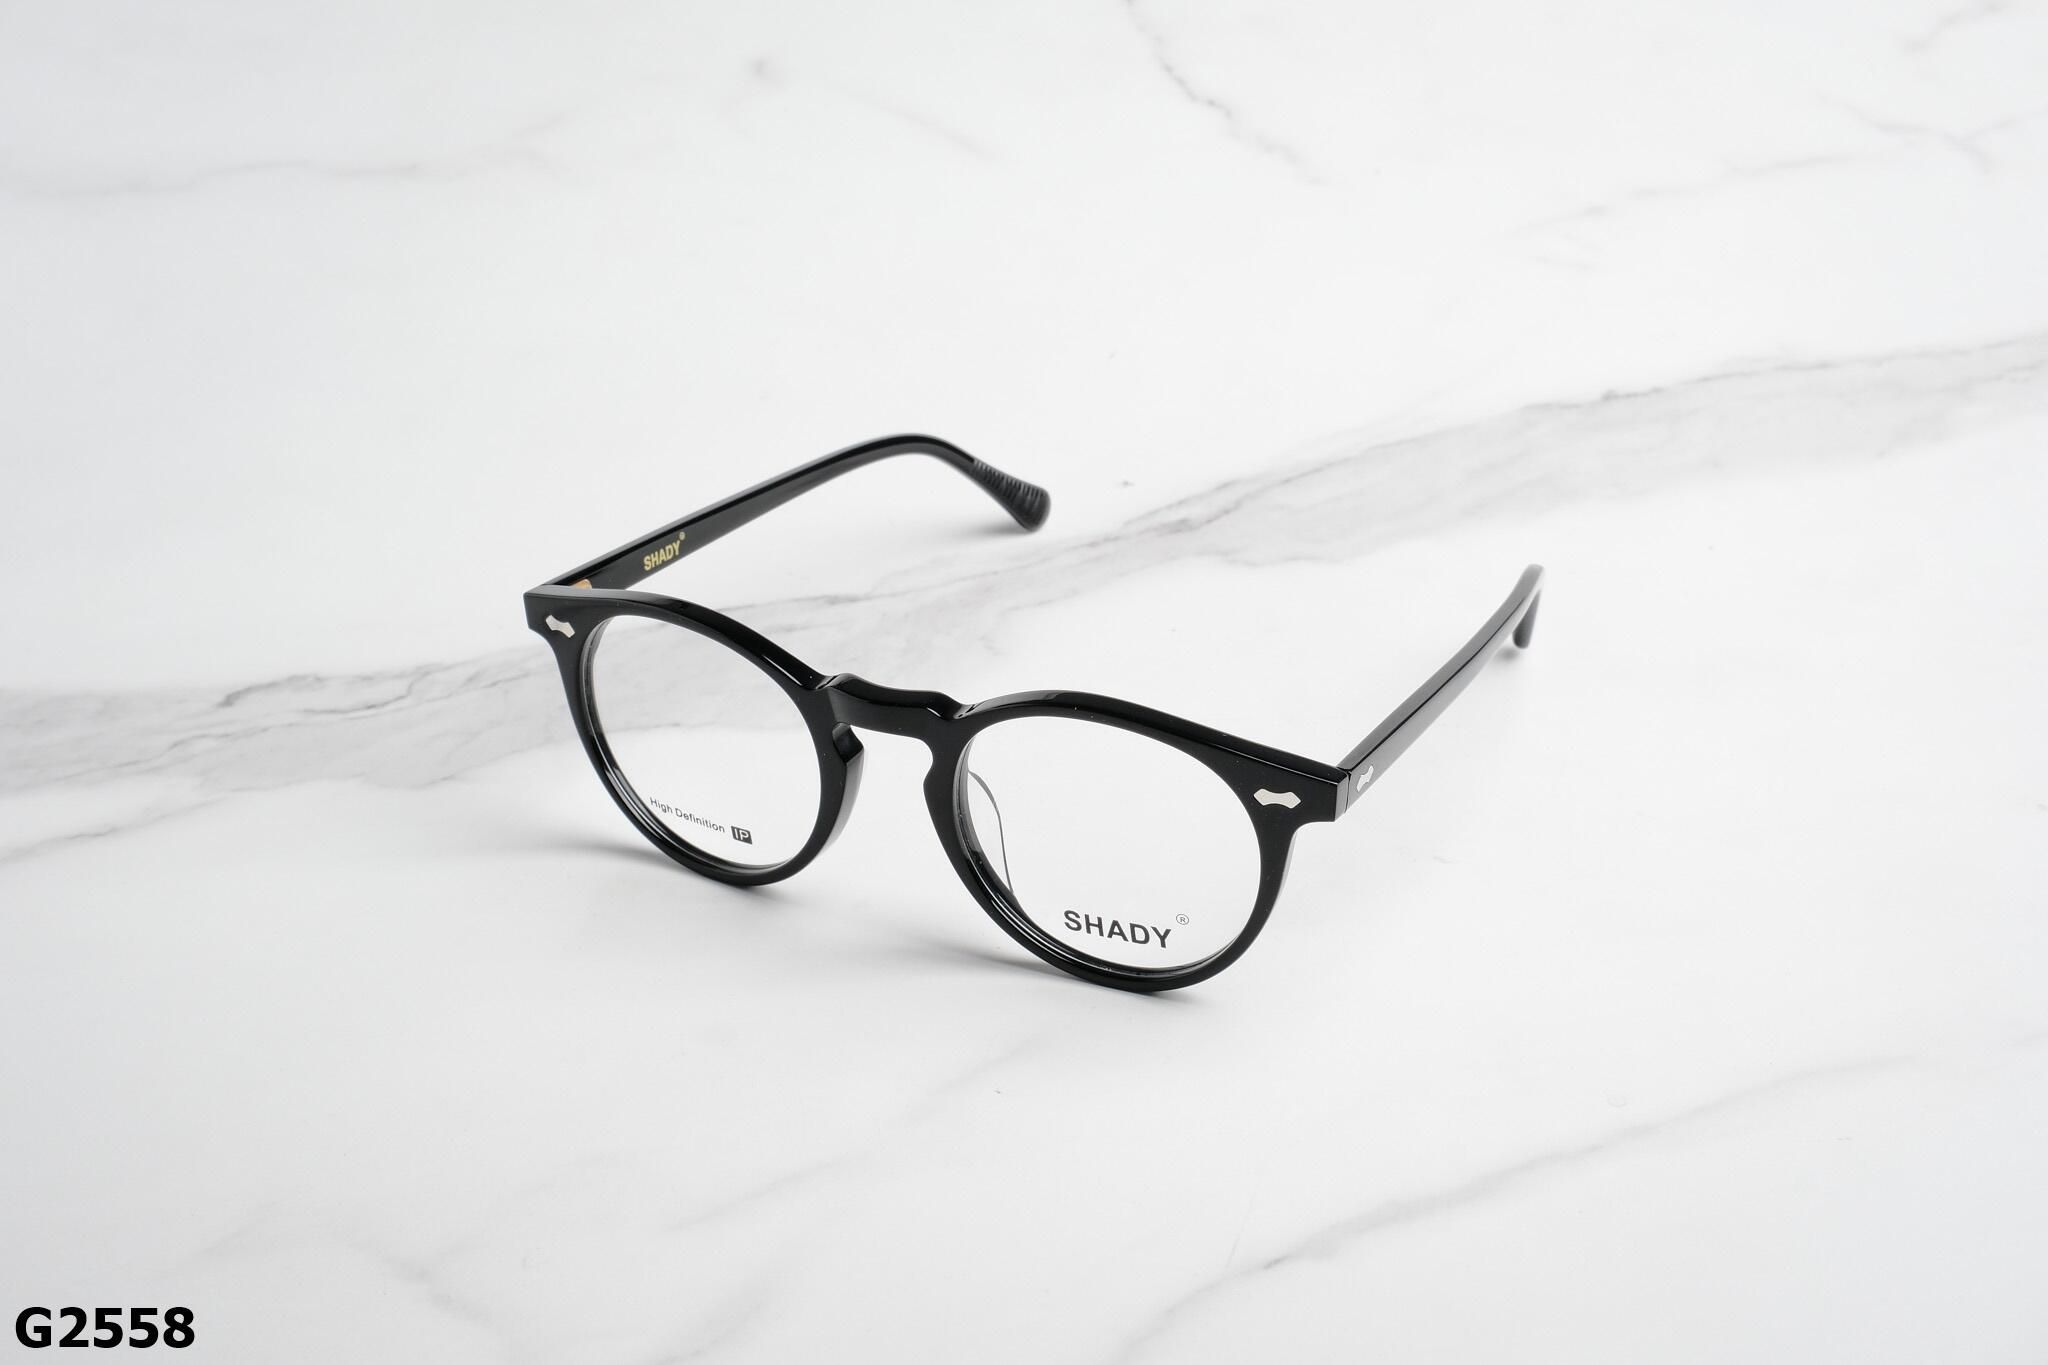  SHADY Eyewear - Glasses - G2558 